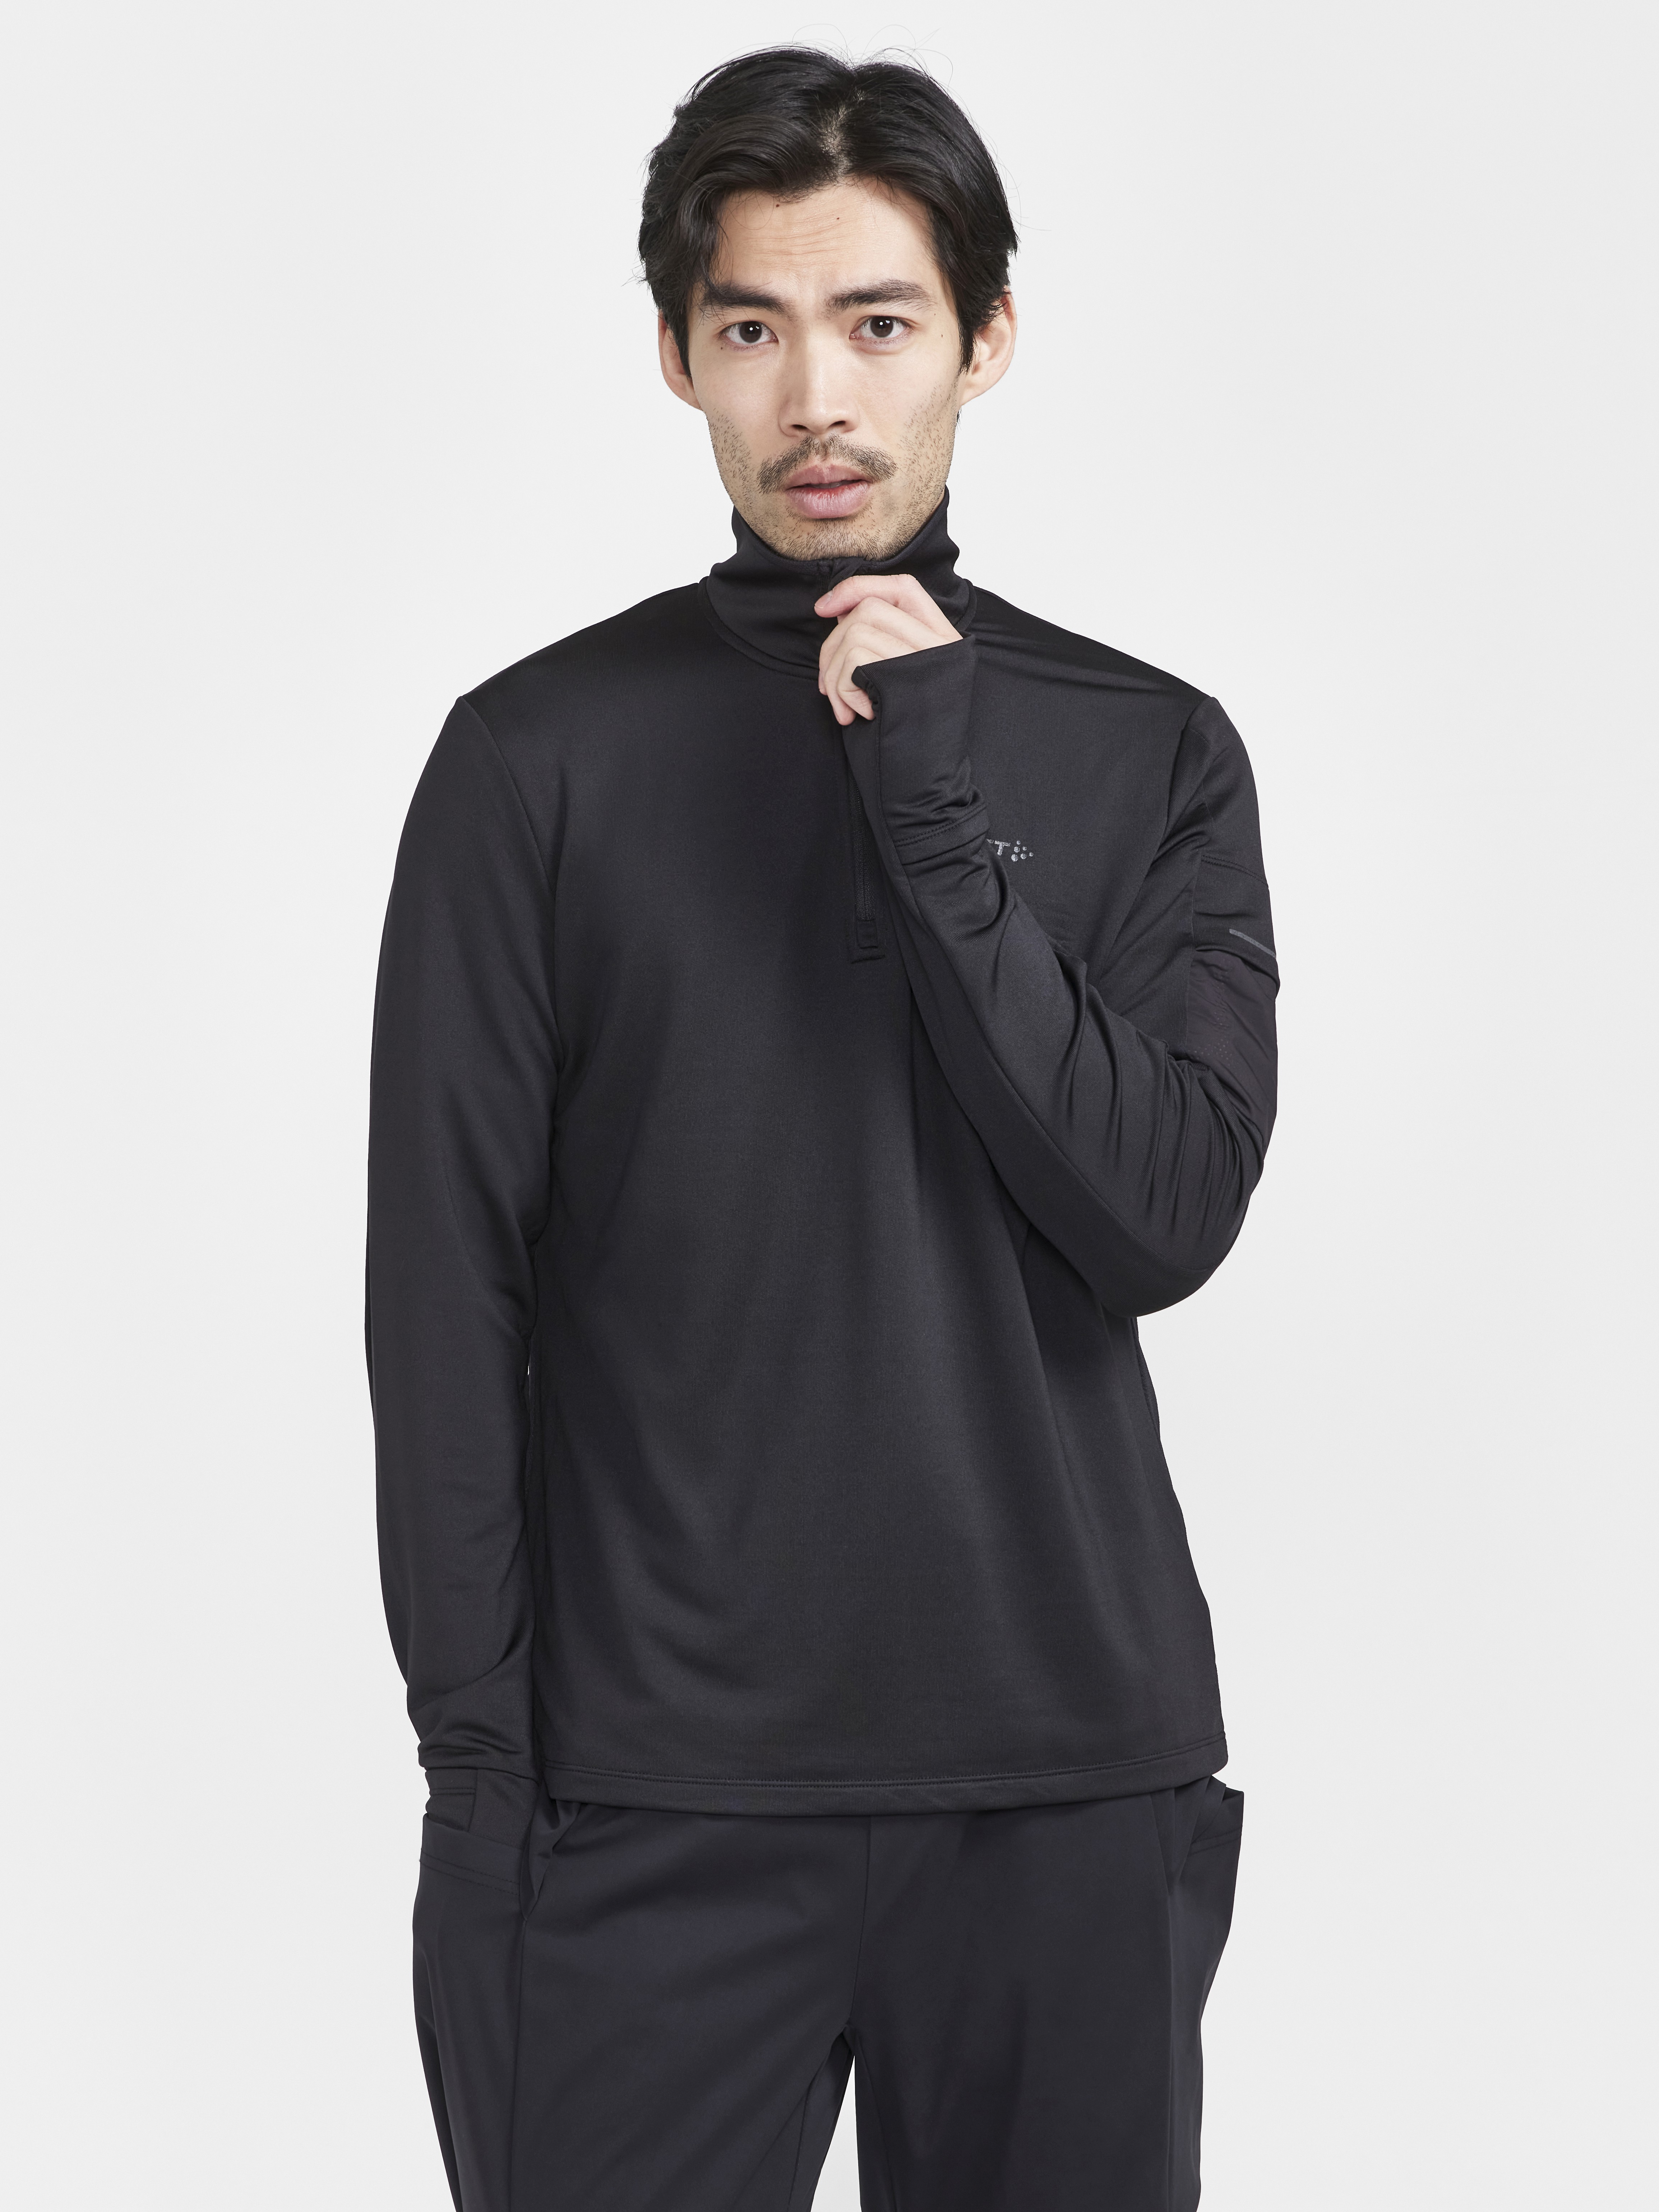 LS Sportswear M | SubZ Black - ADV Craft